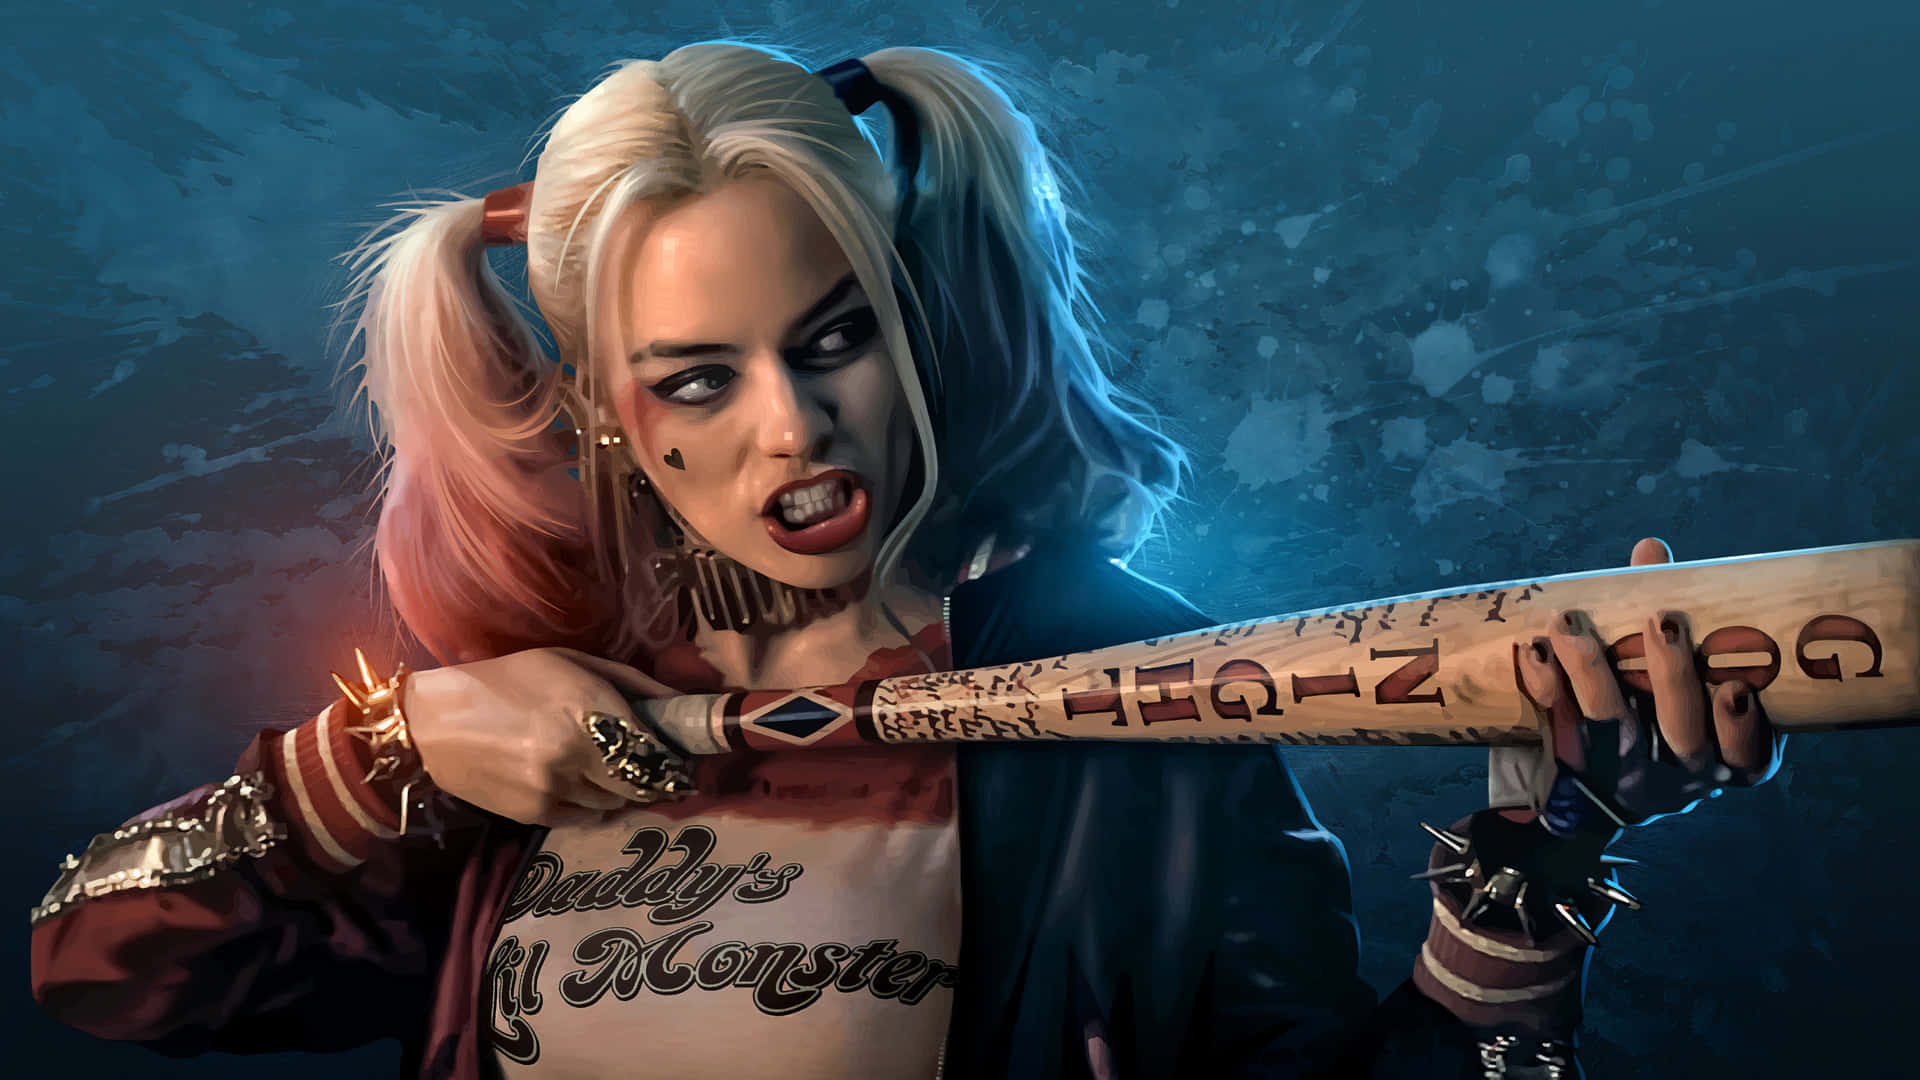 The Joker's seductive sidekick Harley Quinn wreaking havoc in Arkham City. Wallpaper